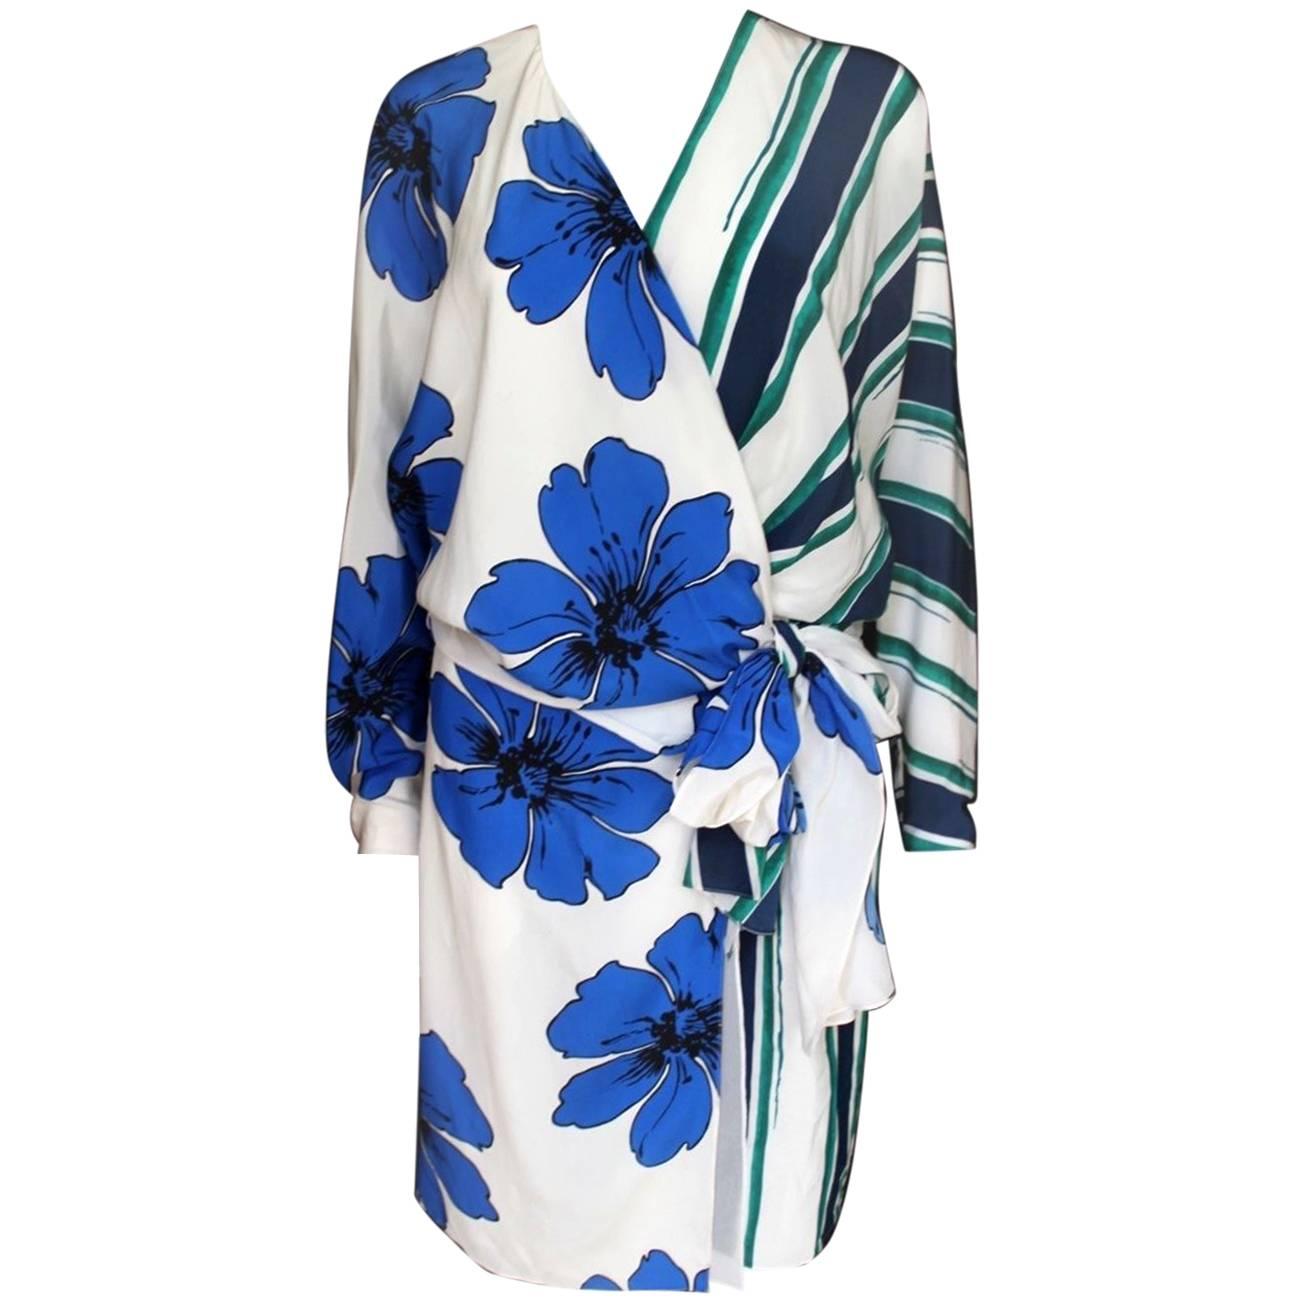 New Chloe Resort 2015 White Striped Floral Dress F 42 uk 12-14  For Sale